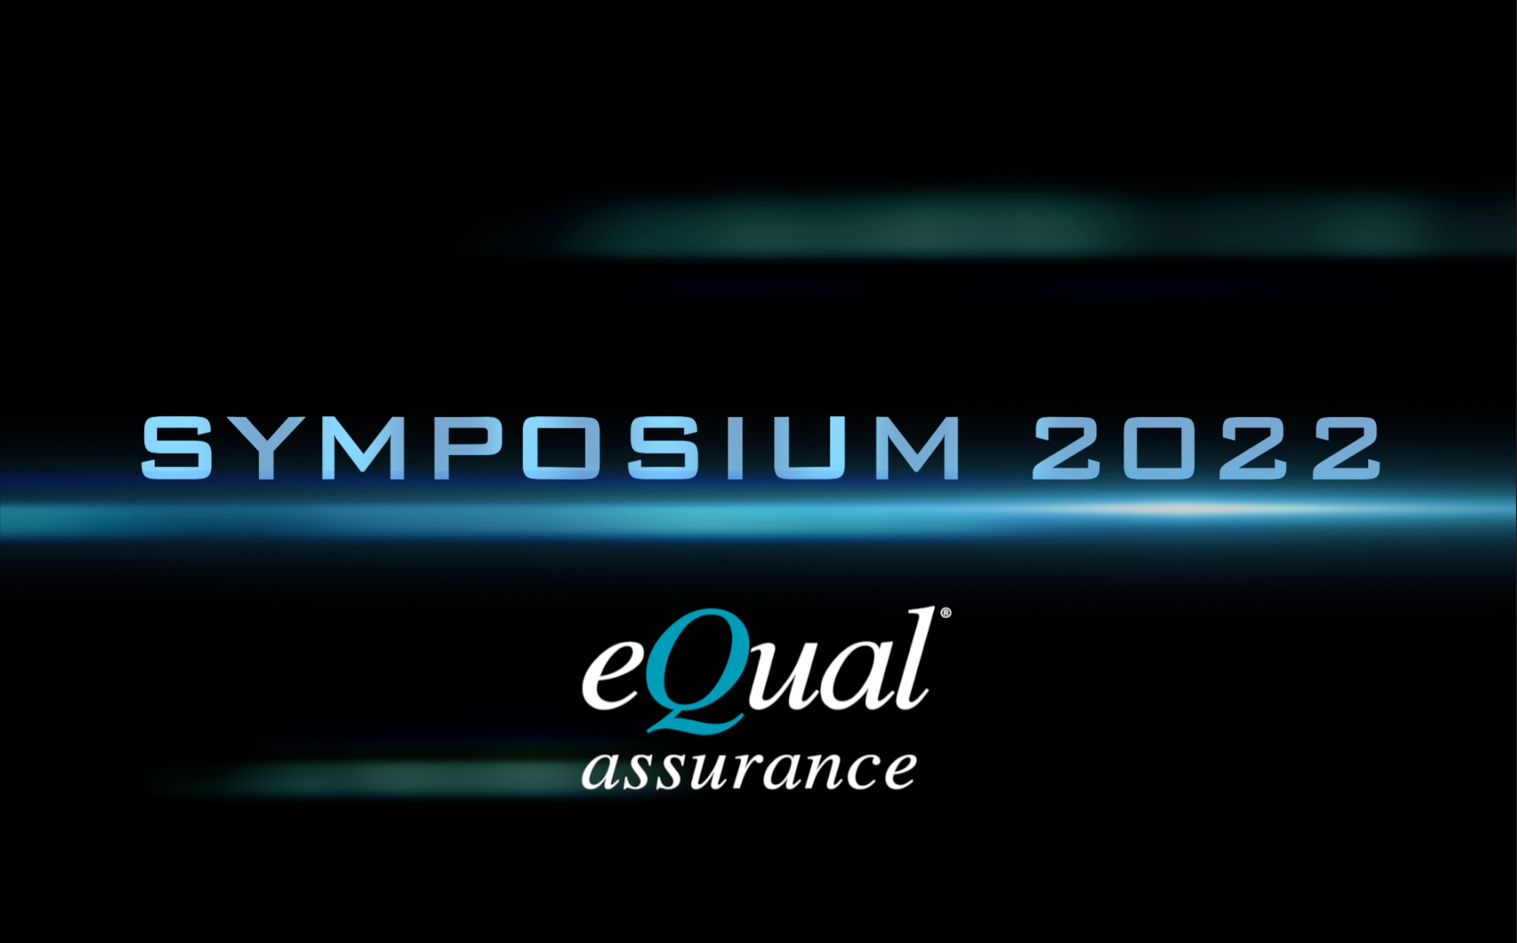 Equal Assurance - Third Global Symposium